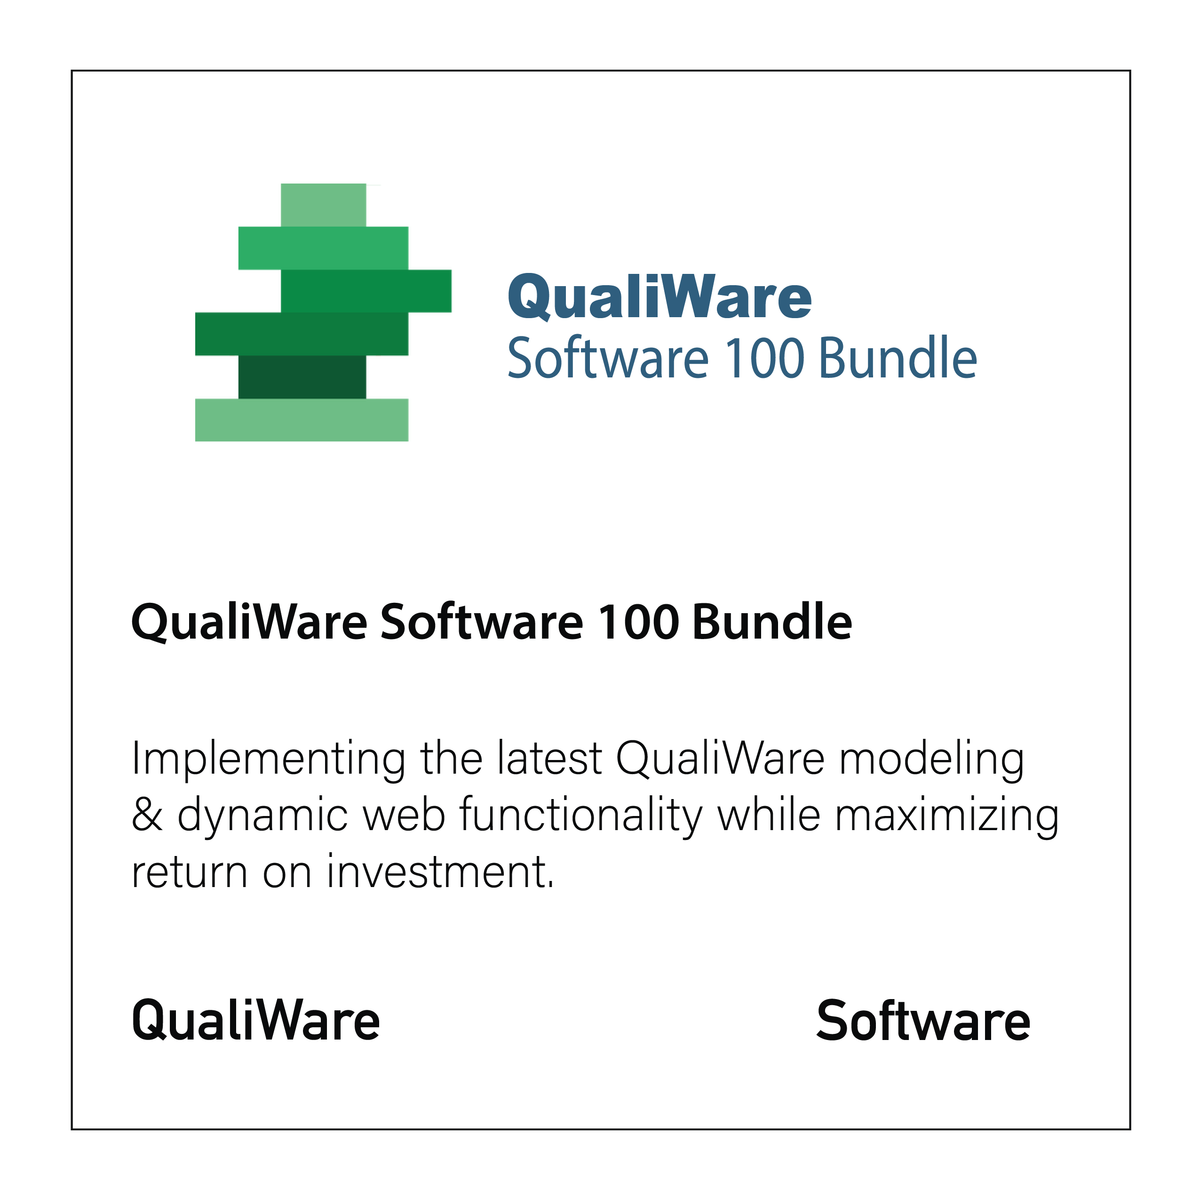 QualiWare Software 100 Bundle